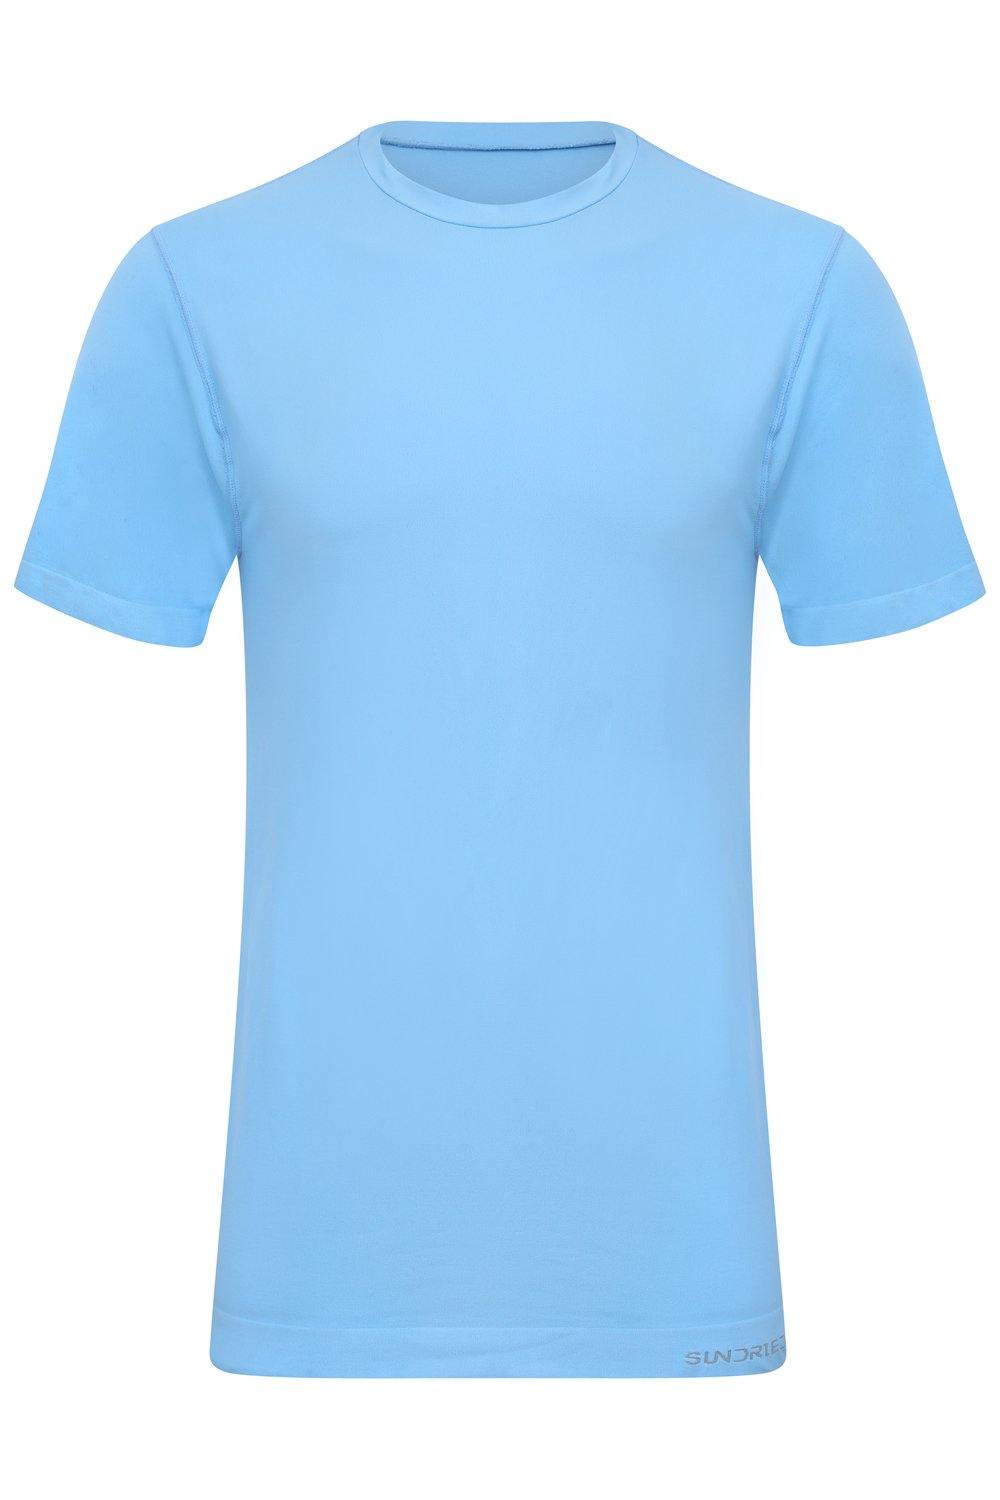 Sundried Eco Tech Men's Fitness Top T-Shirt XS Blue SD0136 XS Blue Activewear